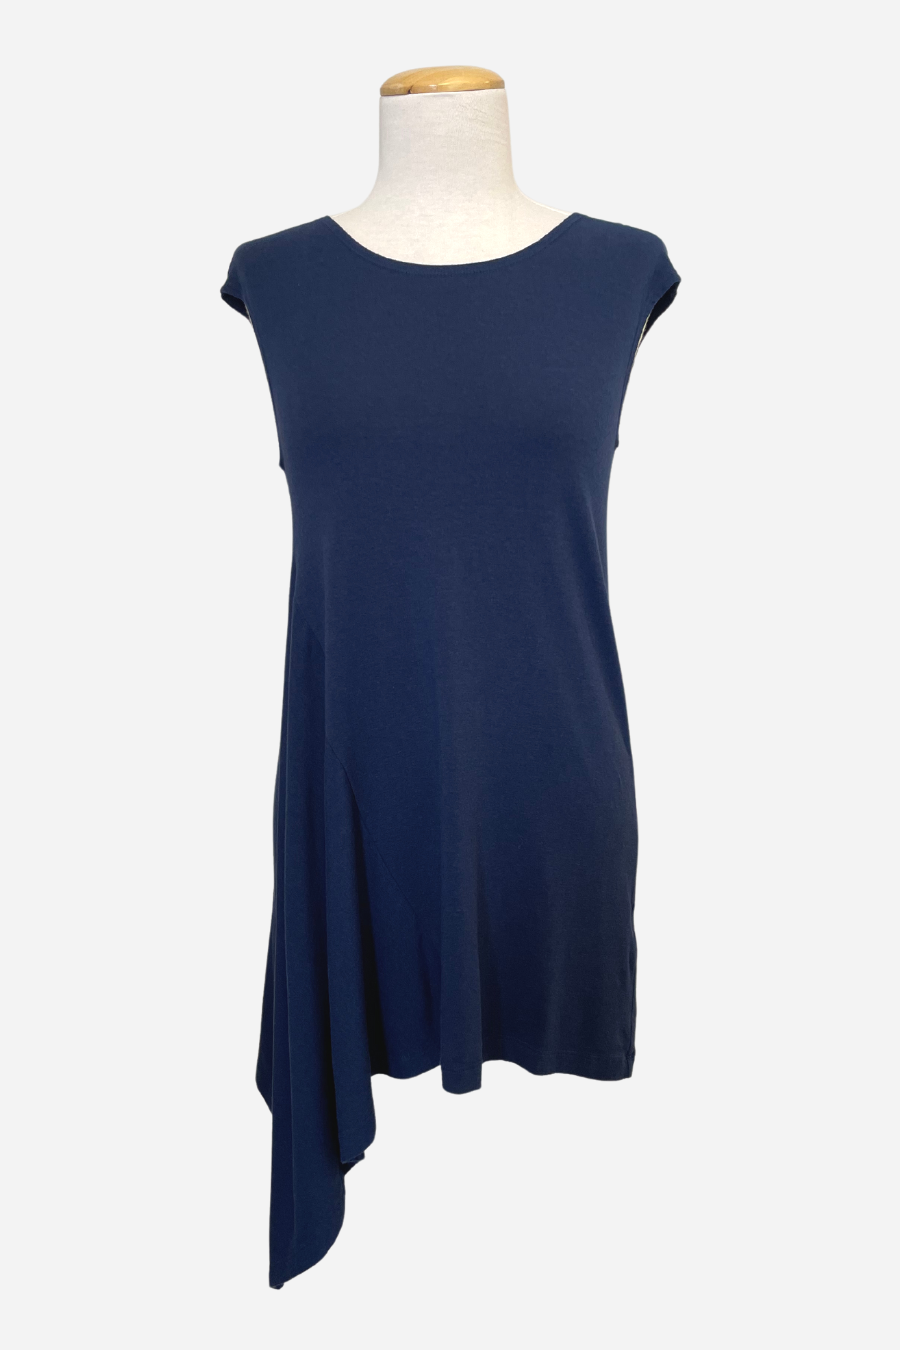 Sandy Tunic, Black, Bamboo- Final Sale – Blue Sky Clothing Co Ltd